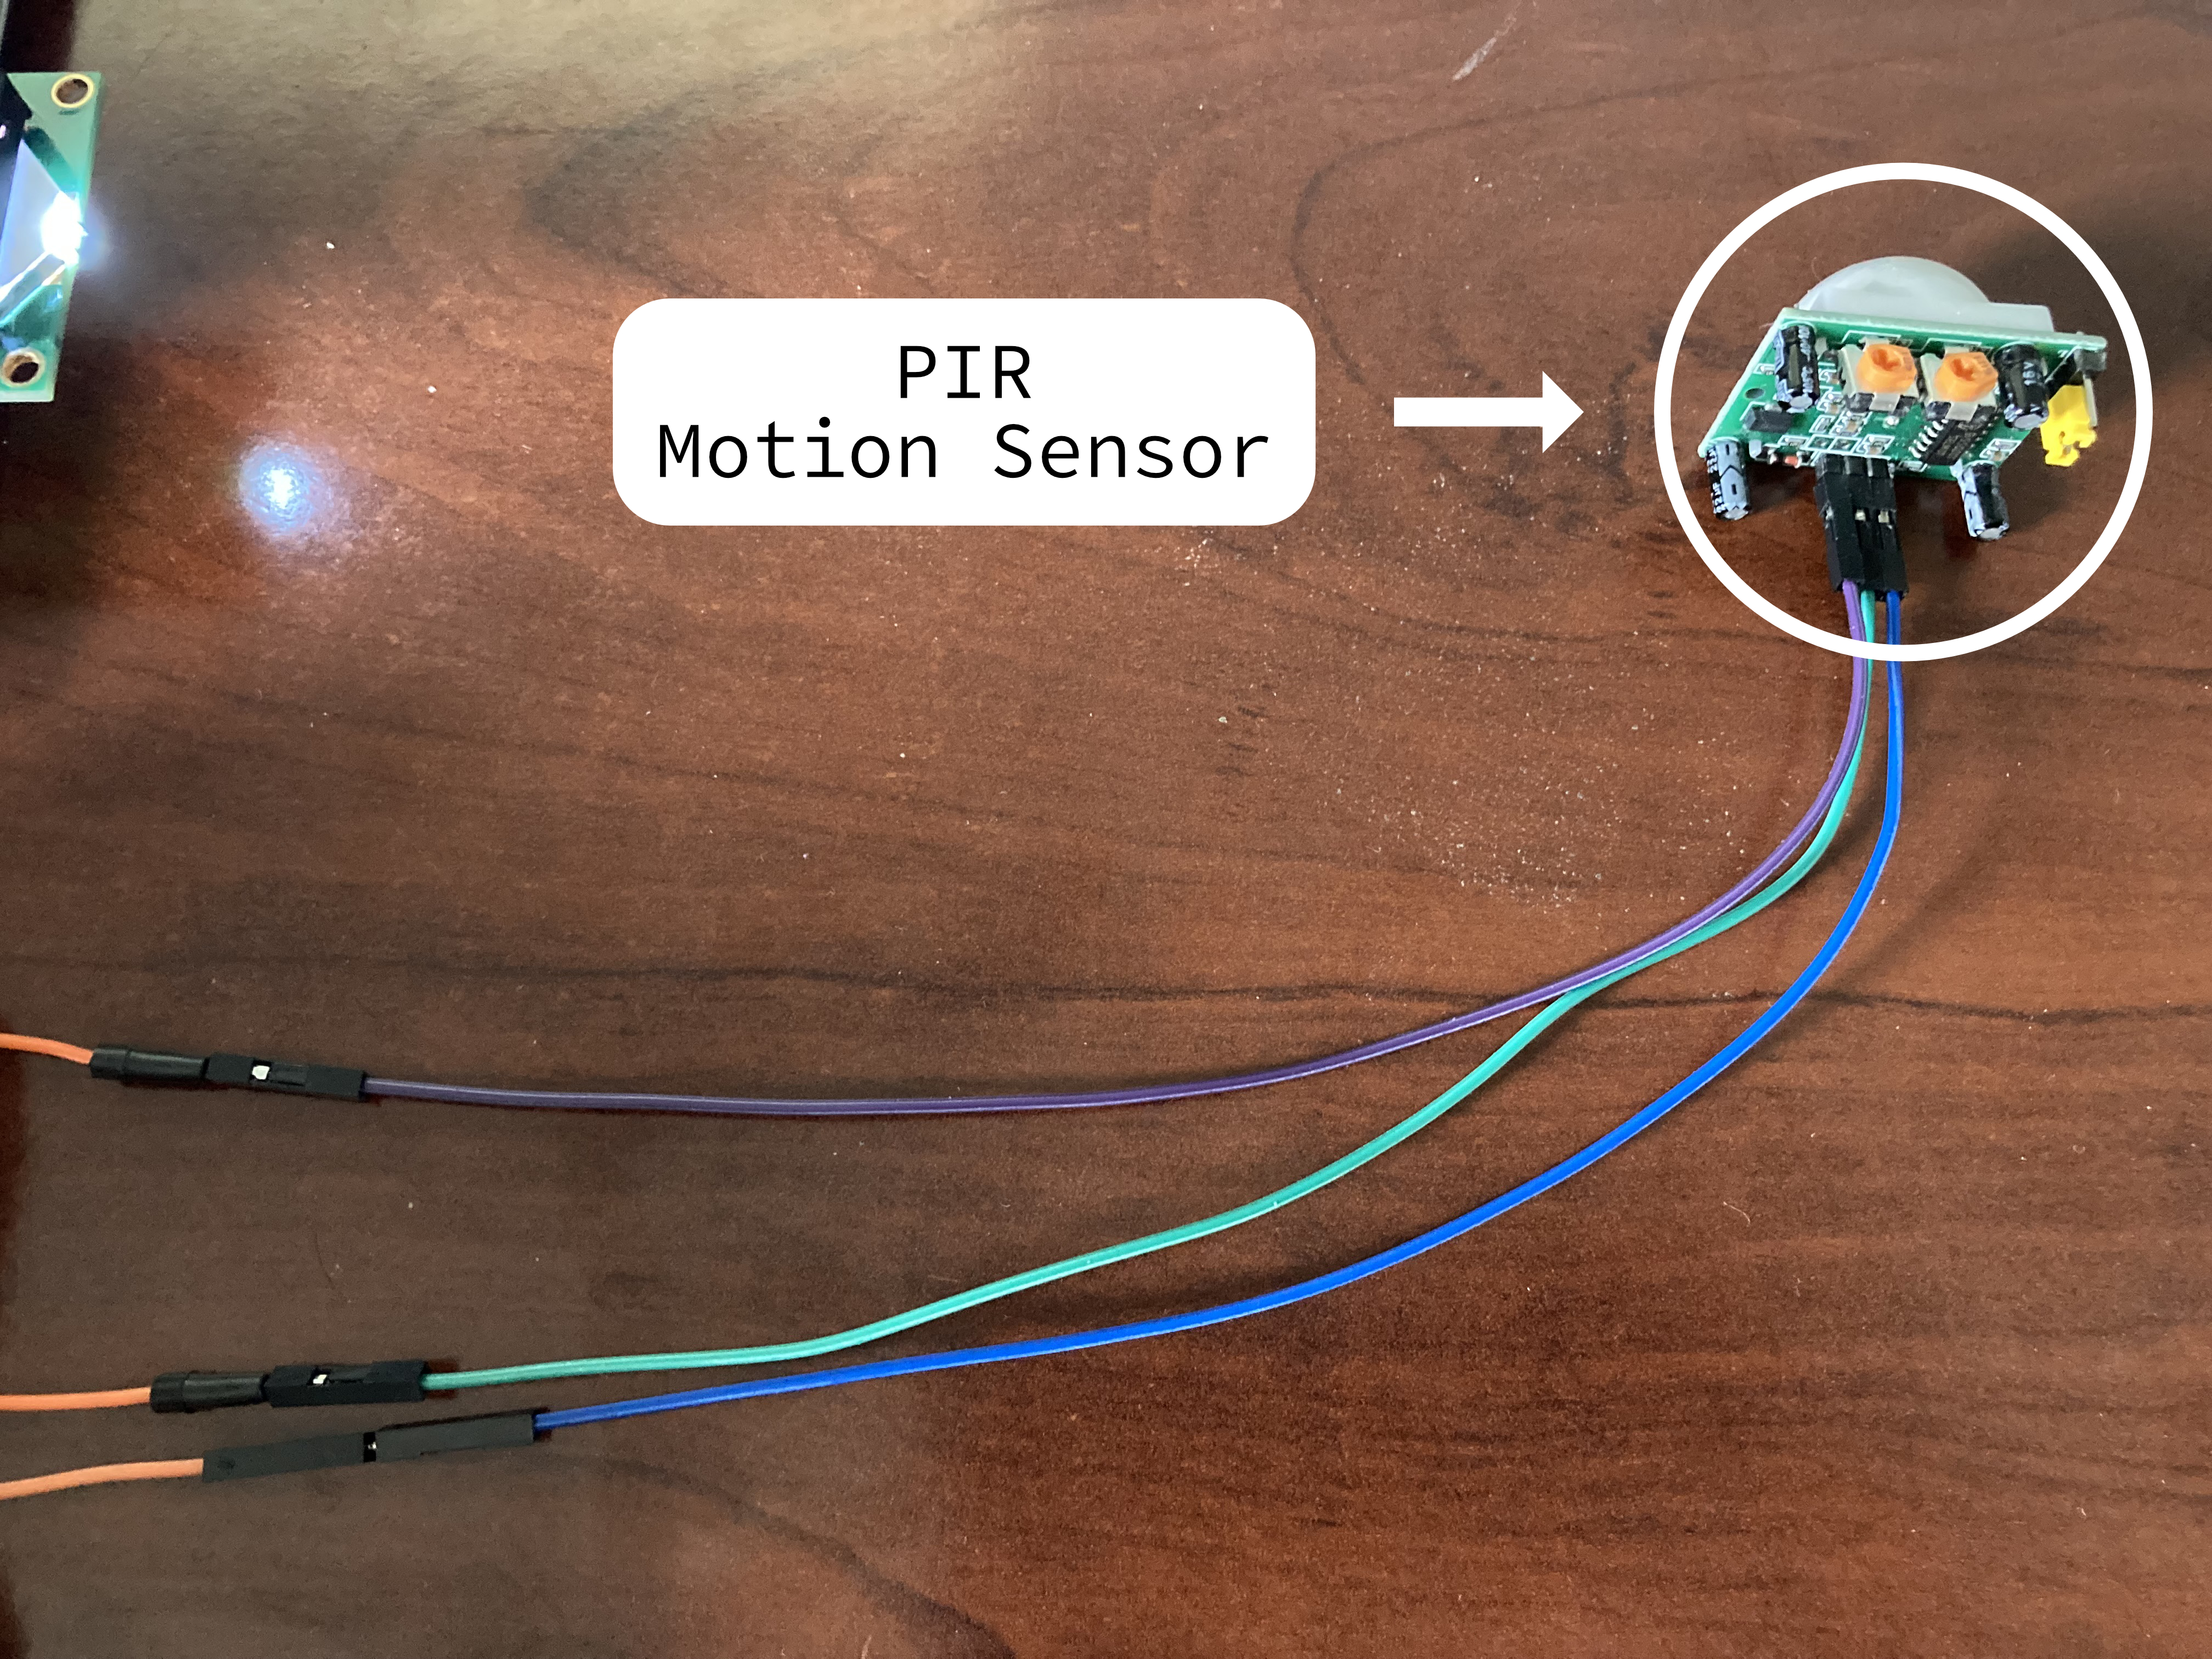 PIR motion sensor